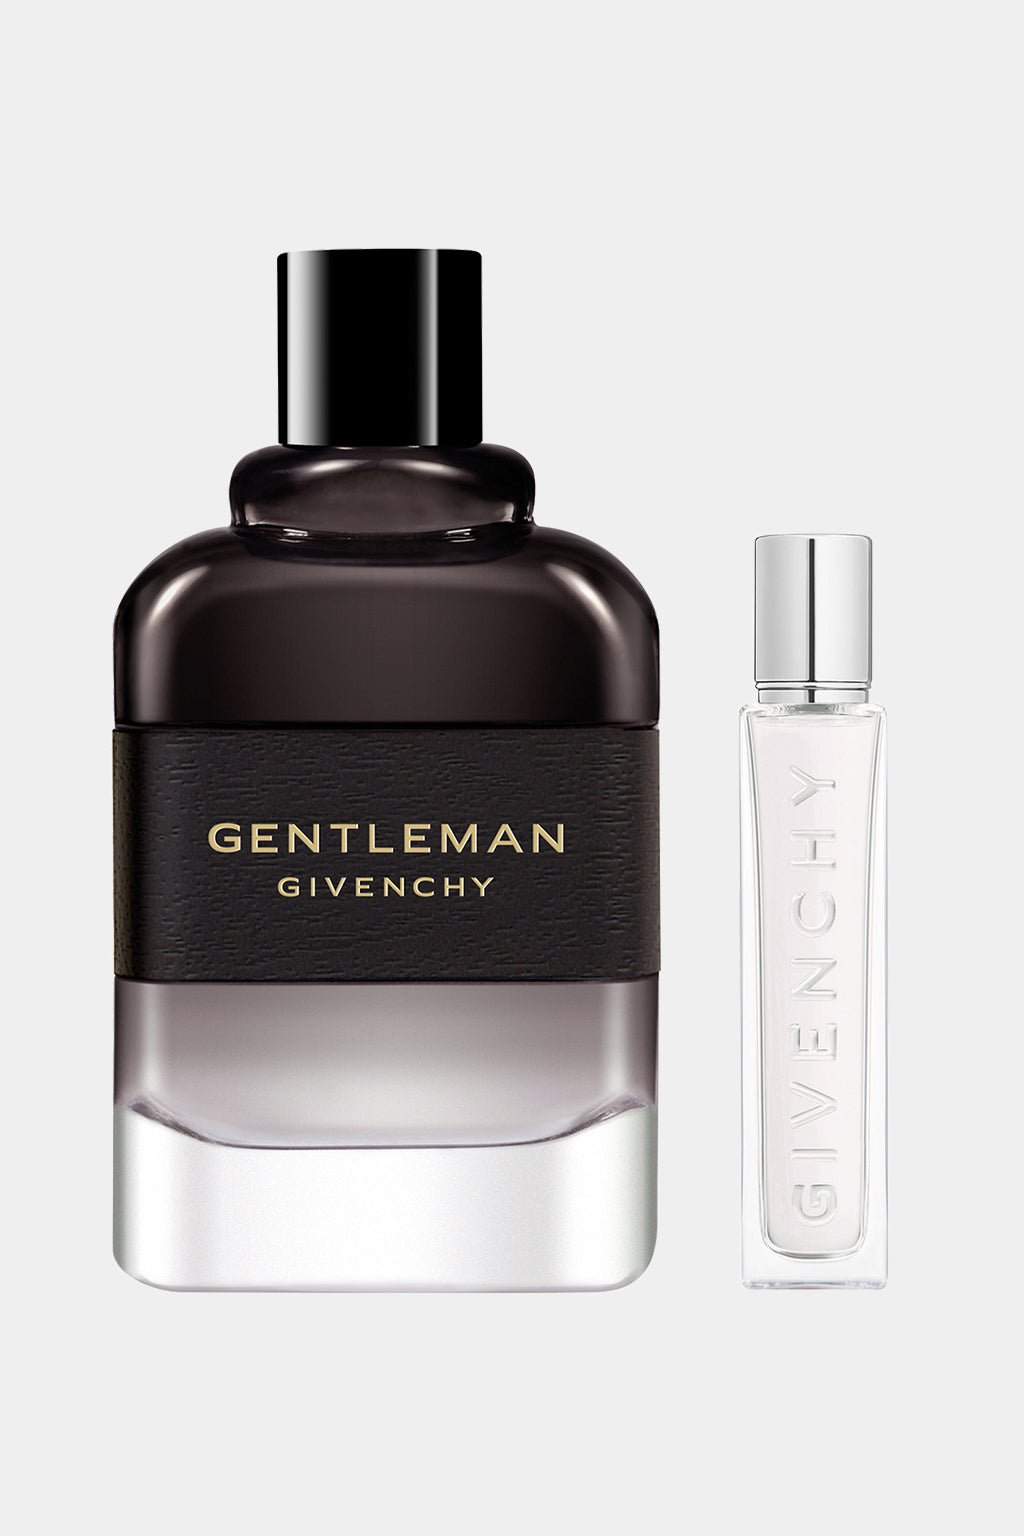 Givenchy - Gentleman Boisee Set